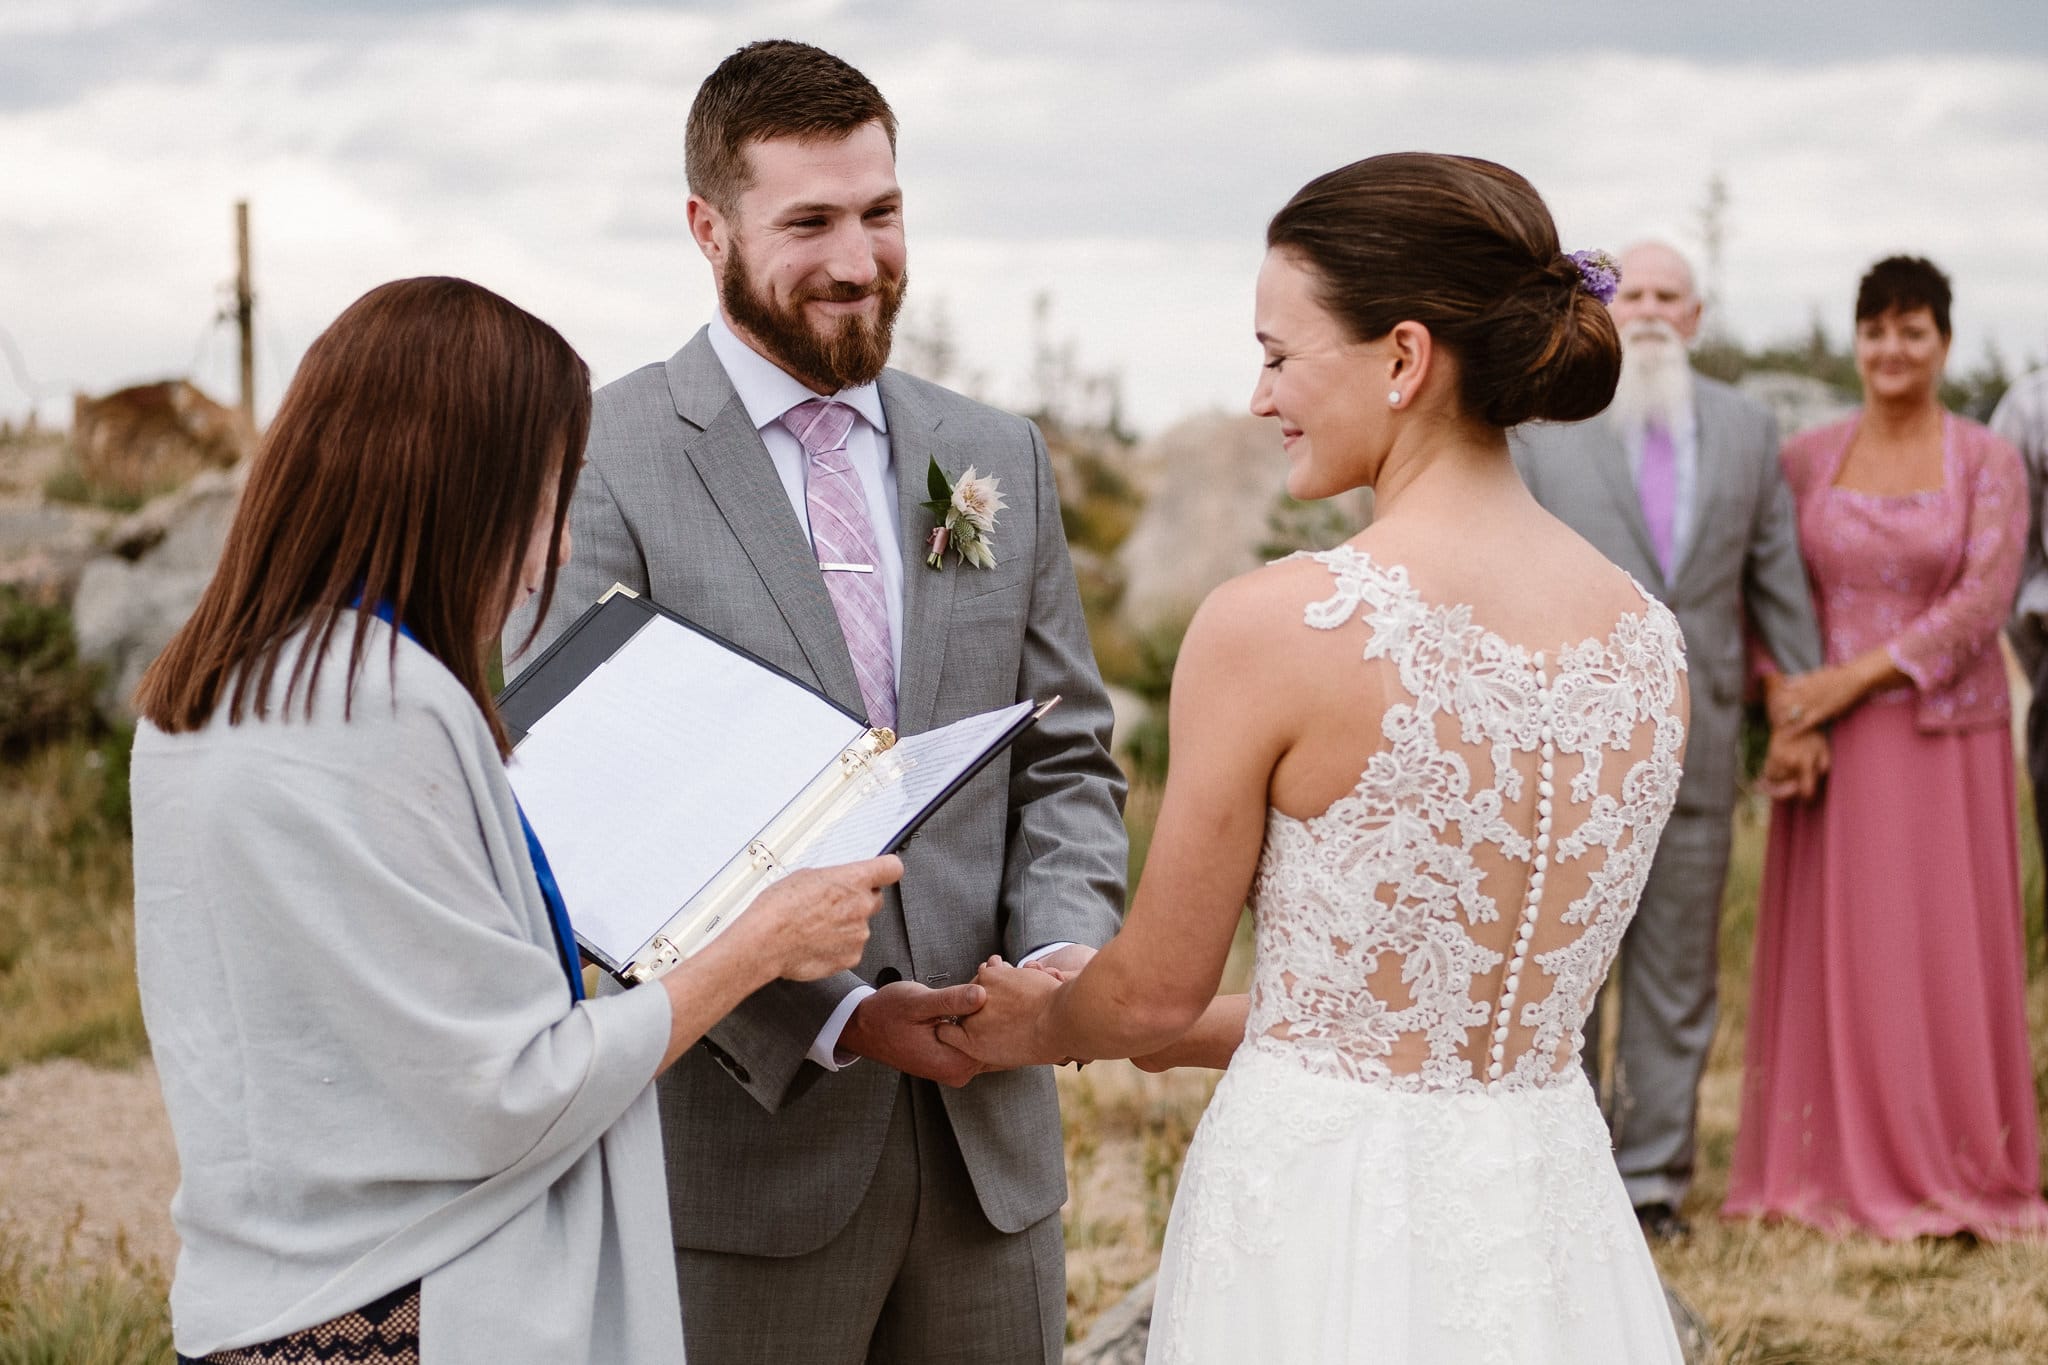 Colorado mountain elopement photographer, alpine lake adventure wedding, Boulder wedding photographer, outdoor ceremony